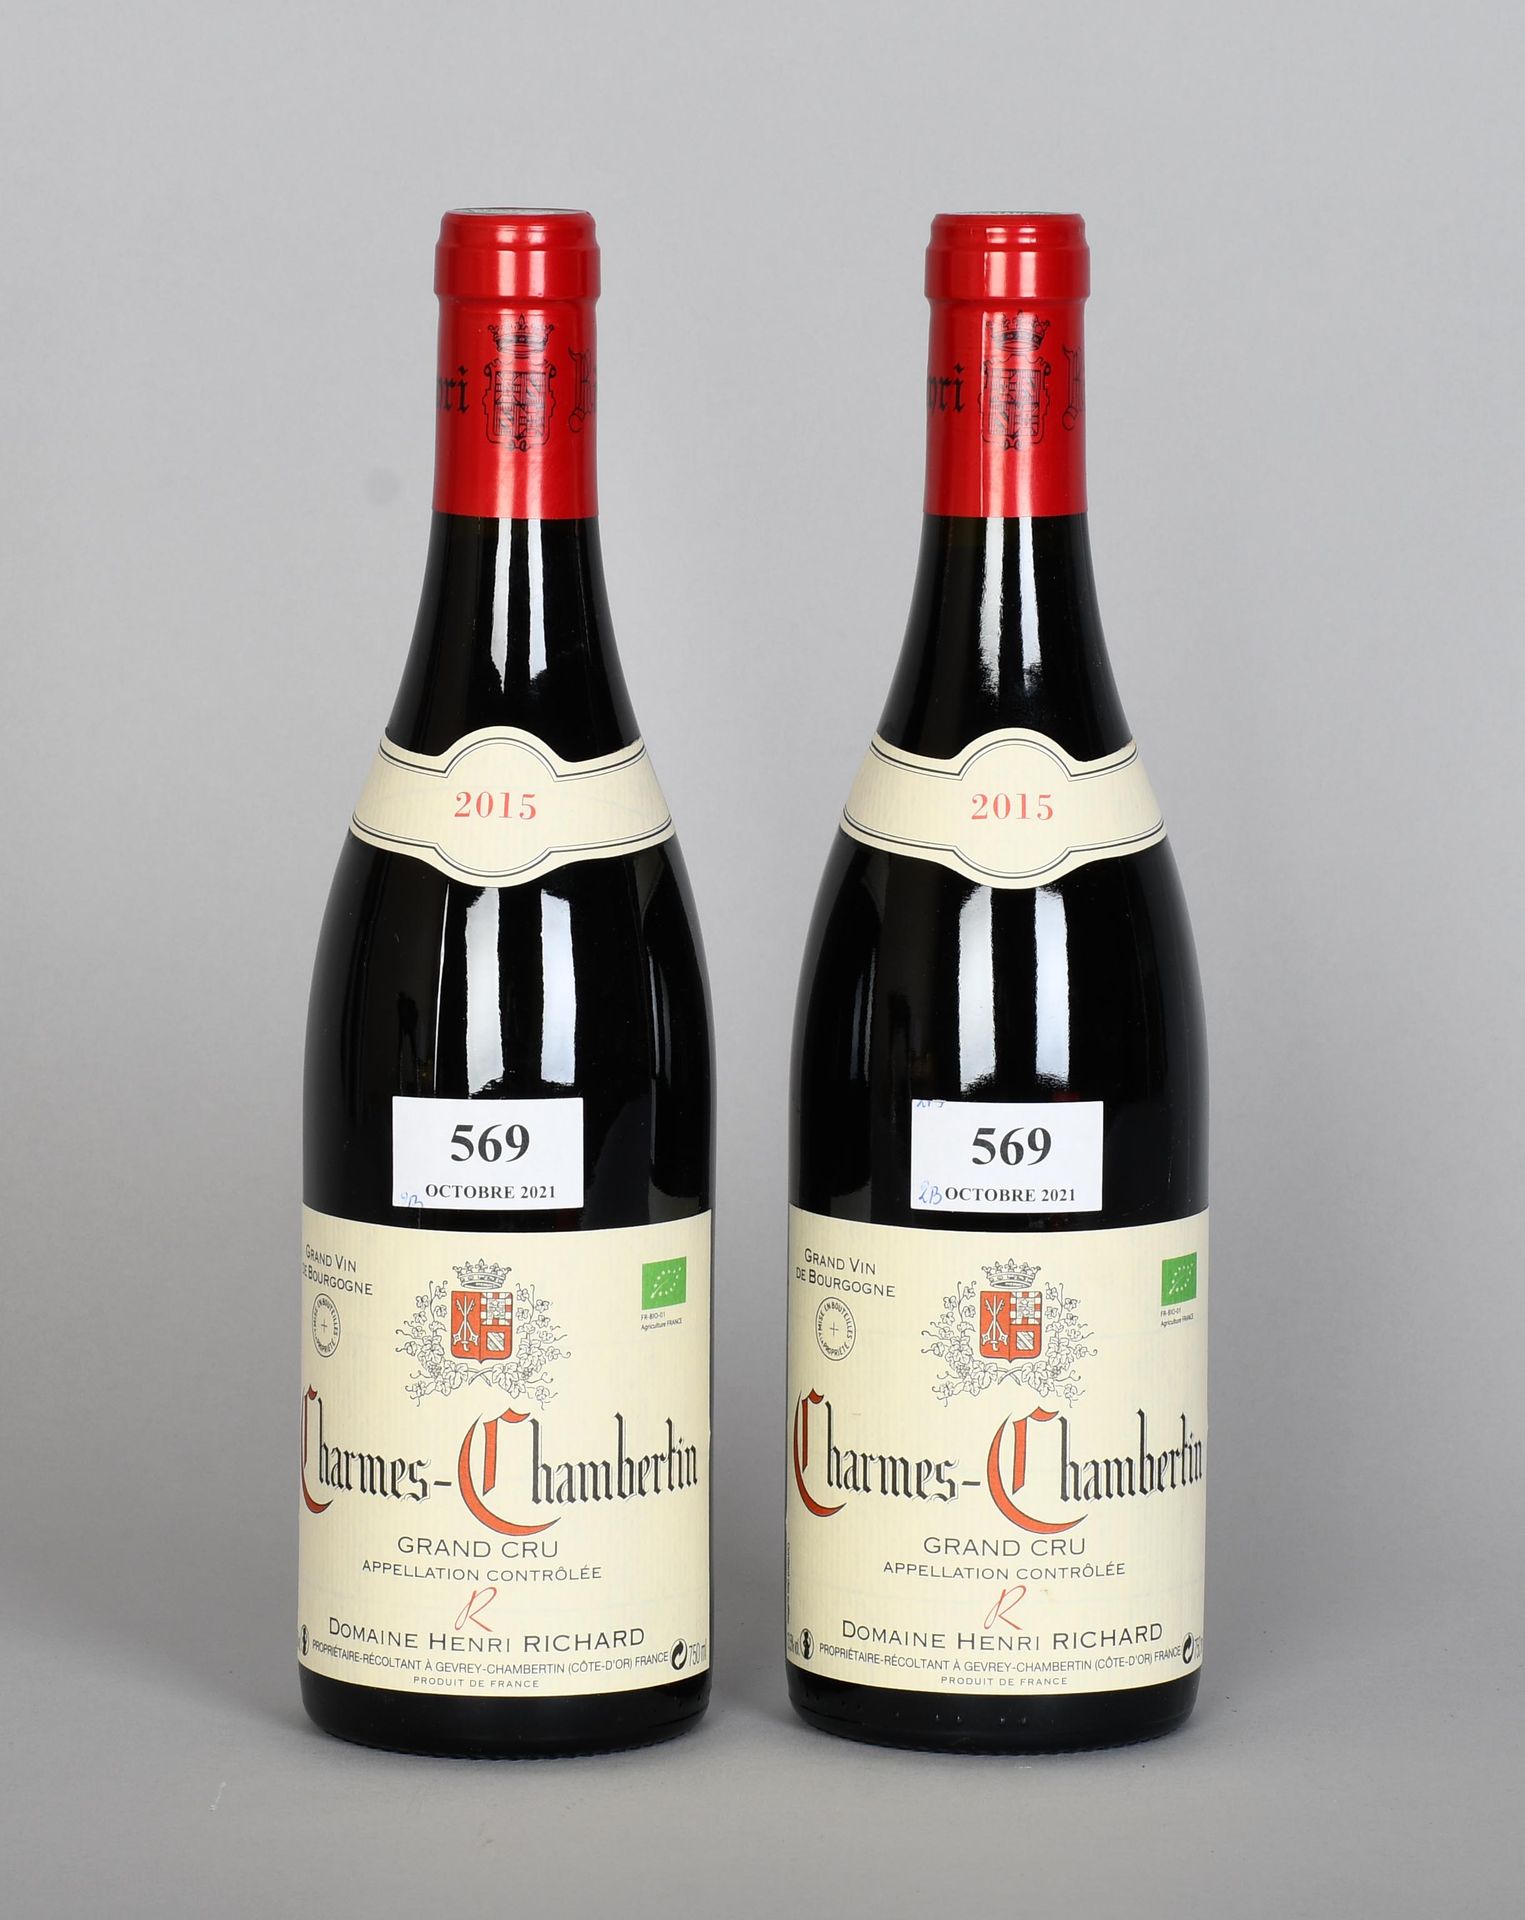 Null Charmes-Chambertin 2015 - Mise propriété - Zwei Flaschen Wein

Grand Cru. G&hellip;